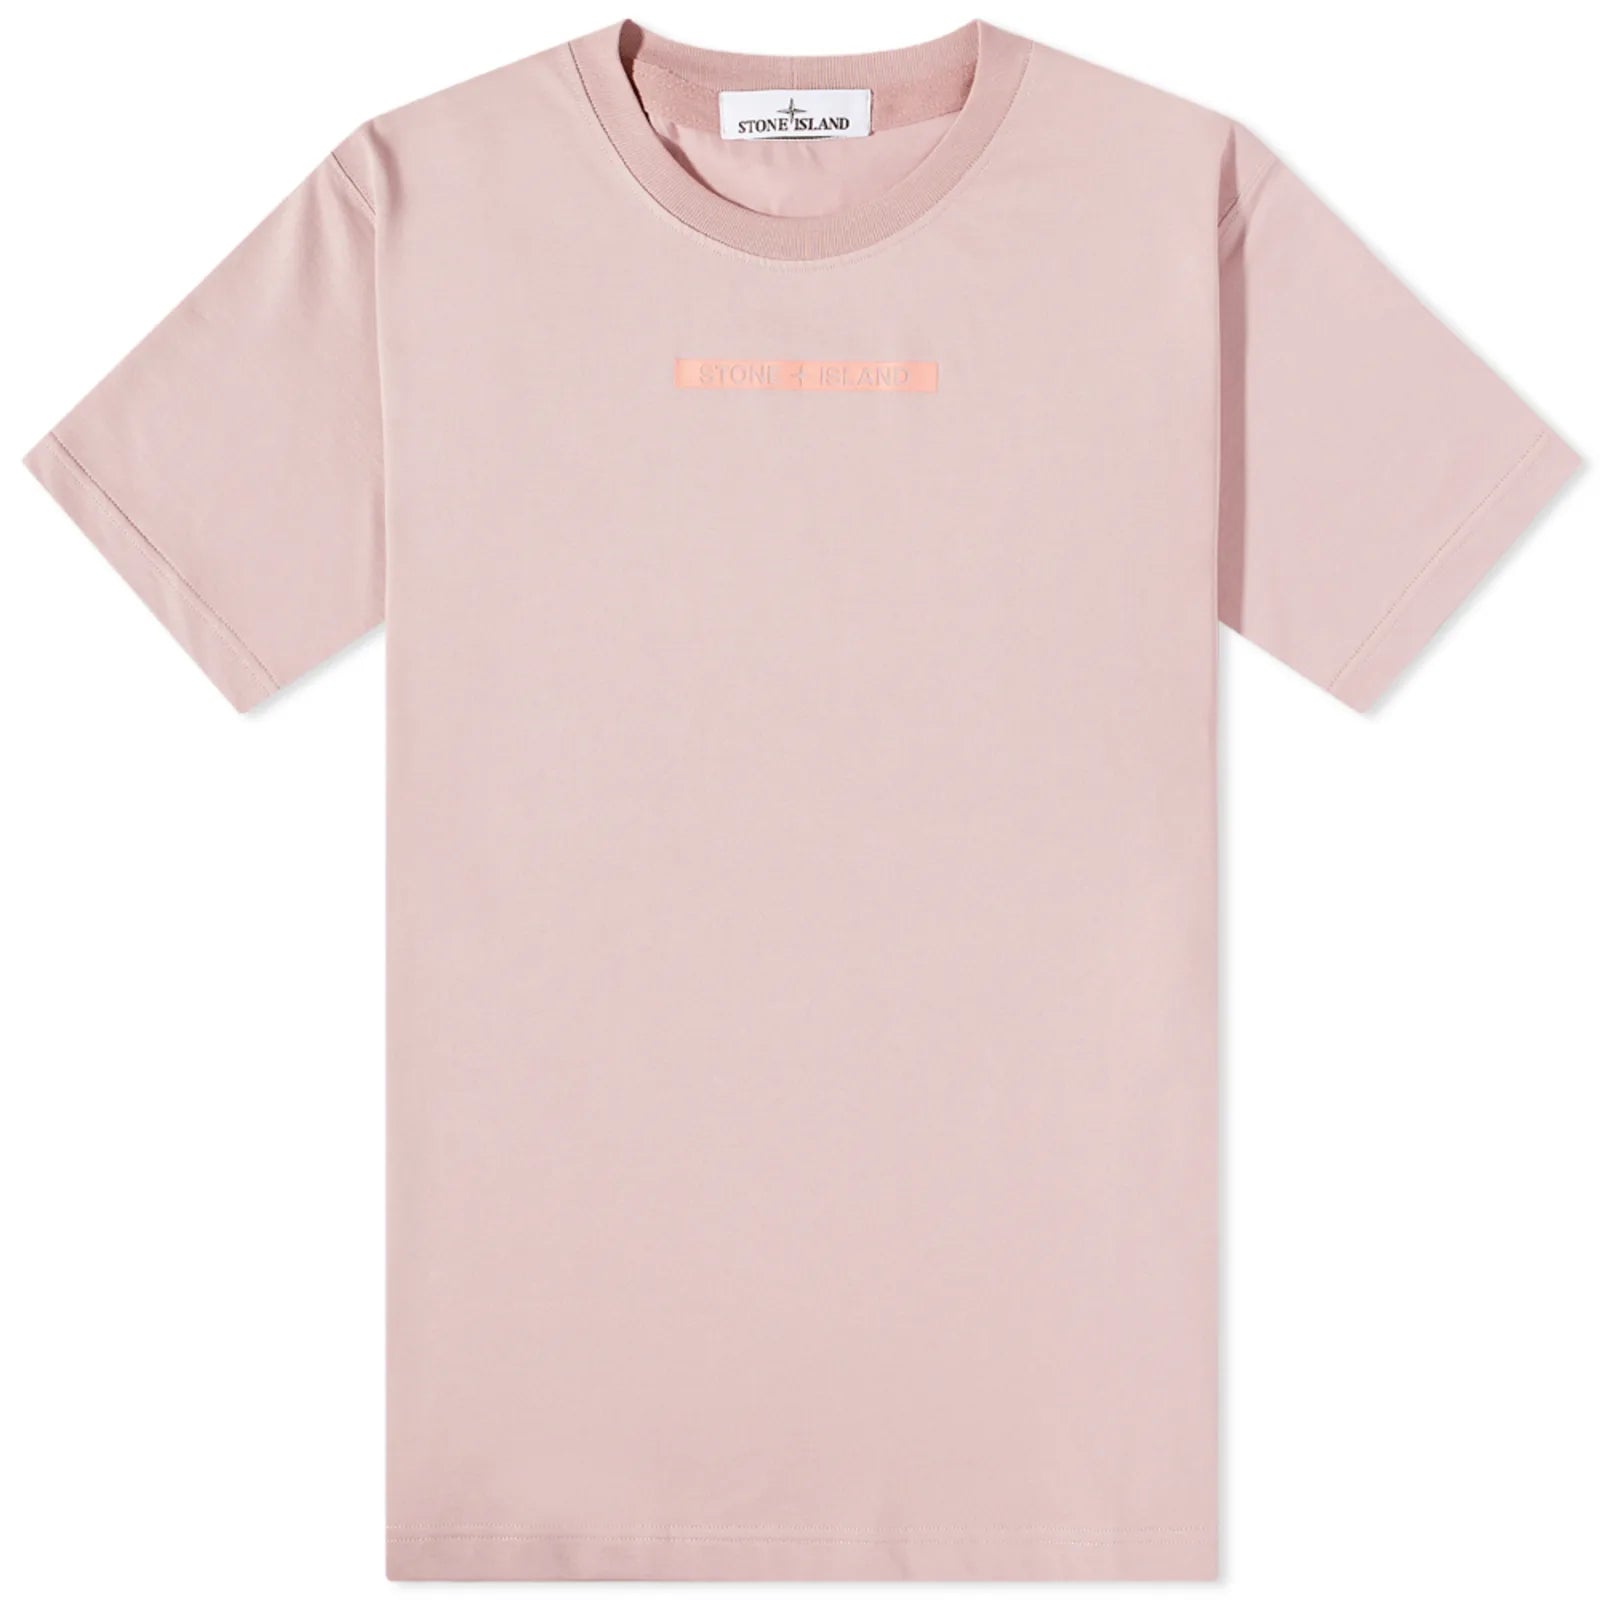 Stone Island Pink Micrographic T-Shirt - DANYOUNGUK